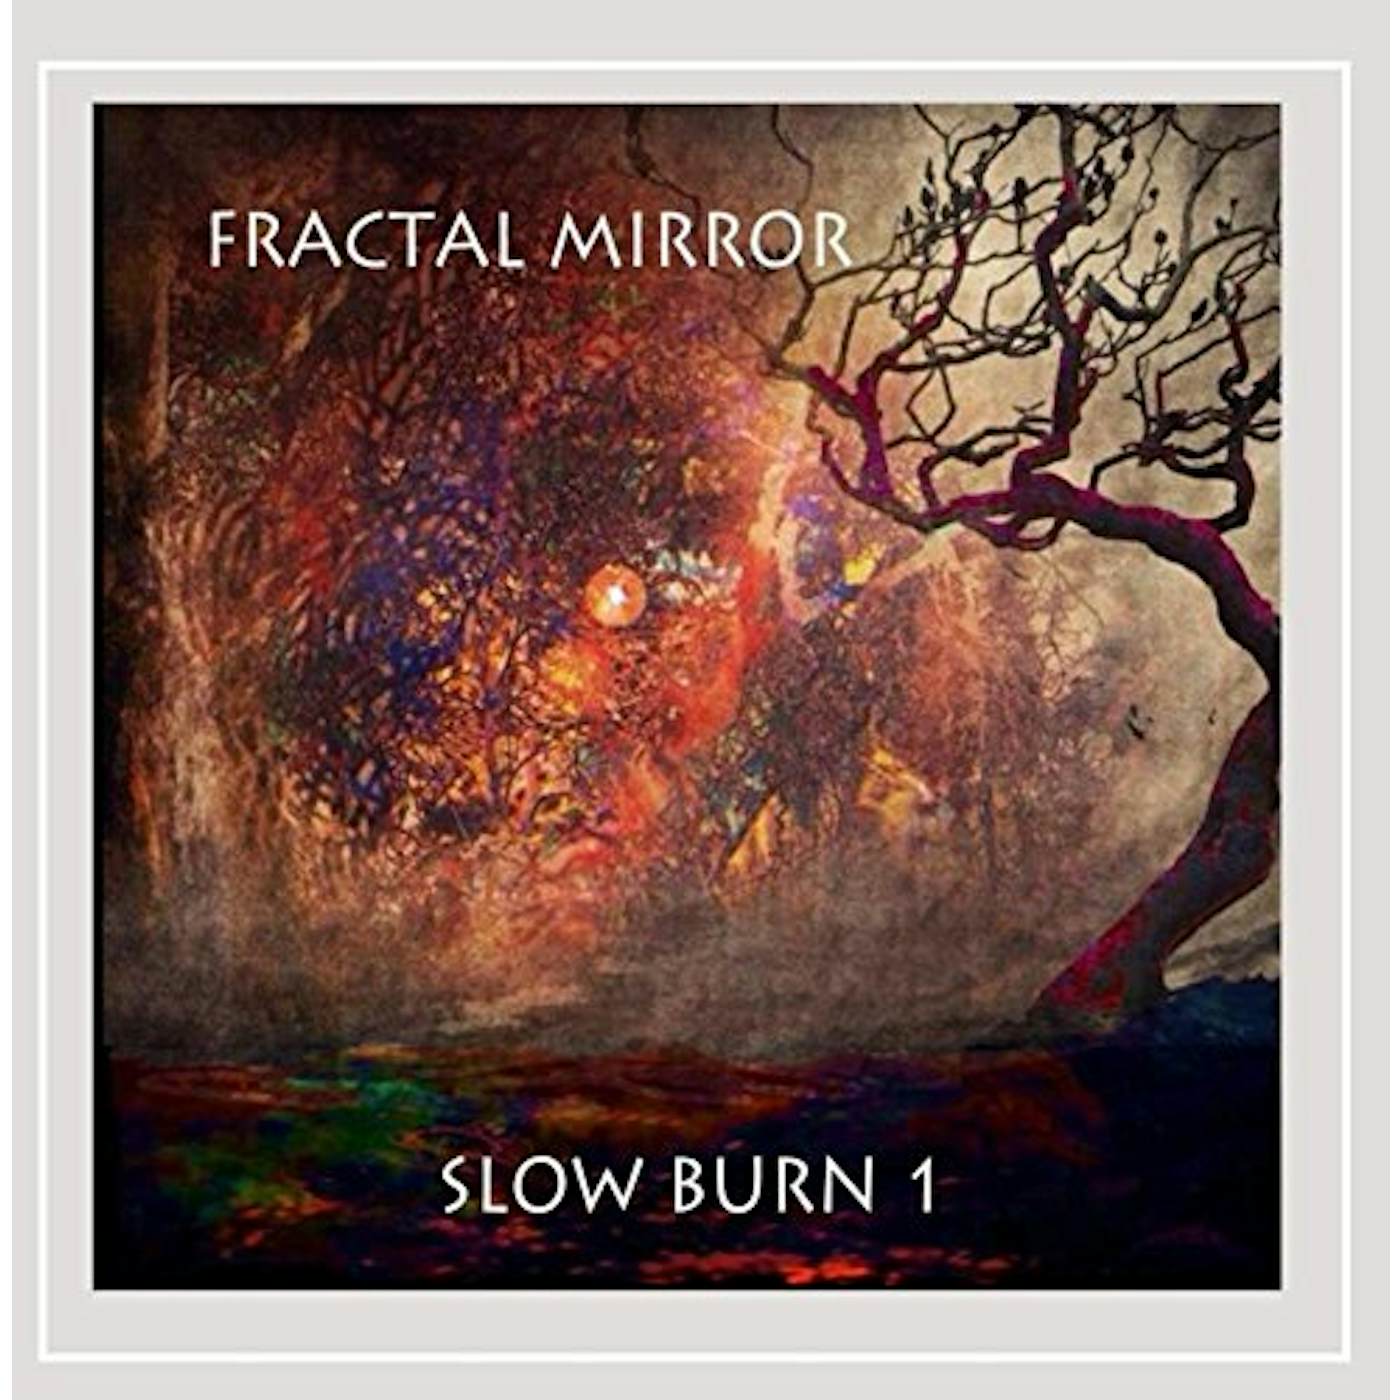 Fractal Mirror SLOW BURN 1 CD